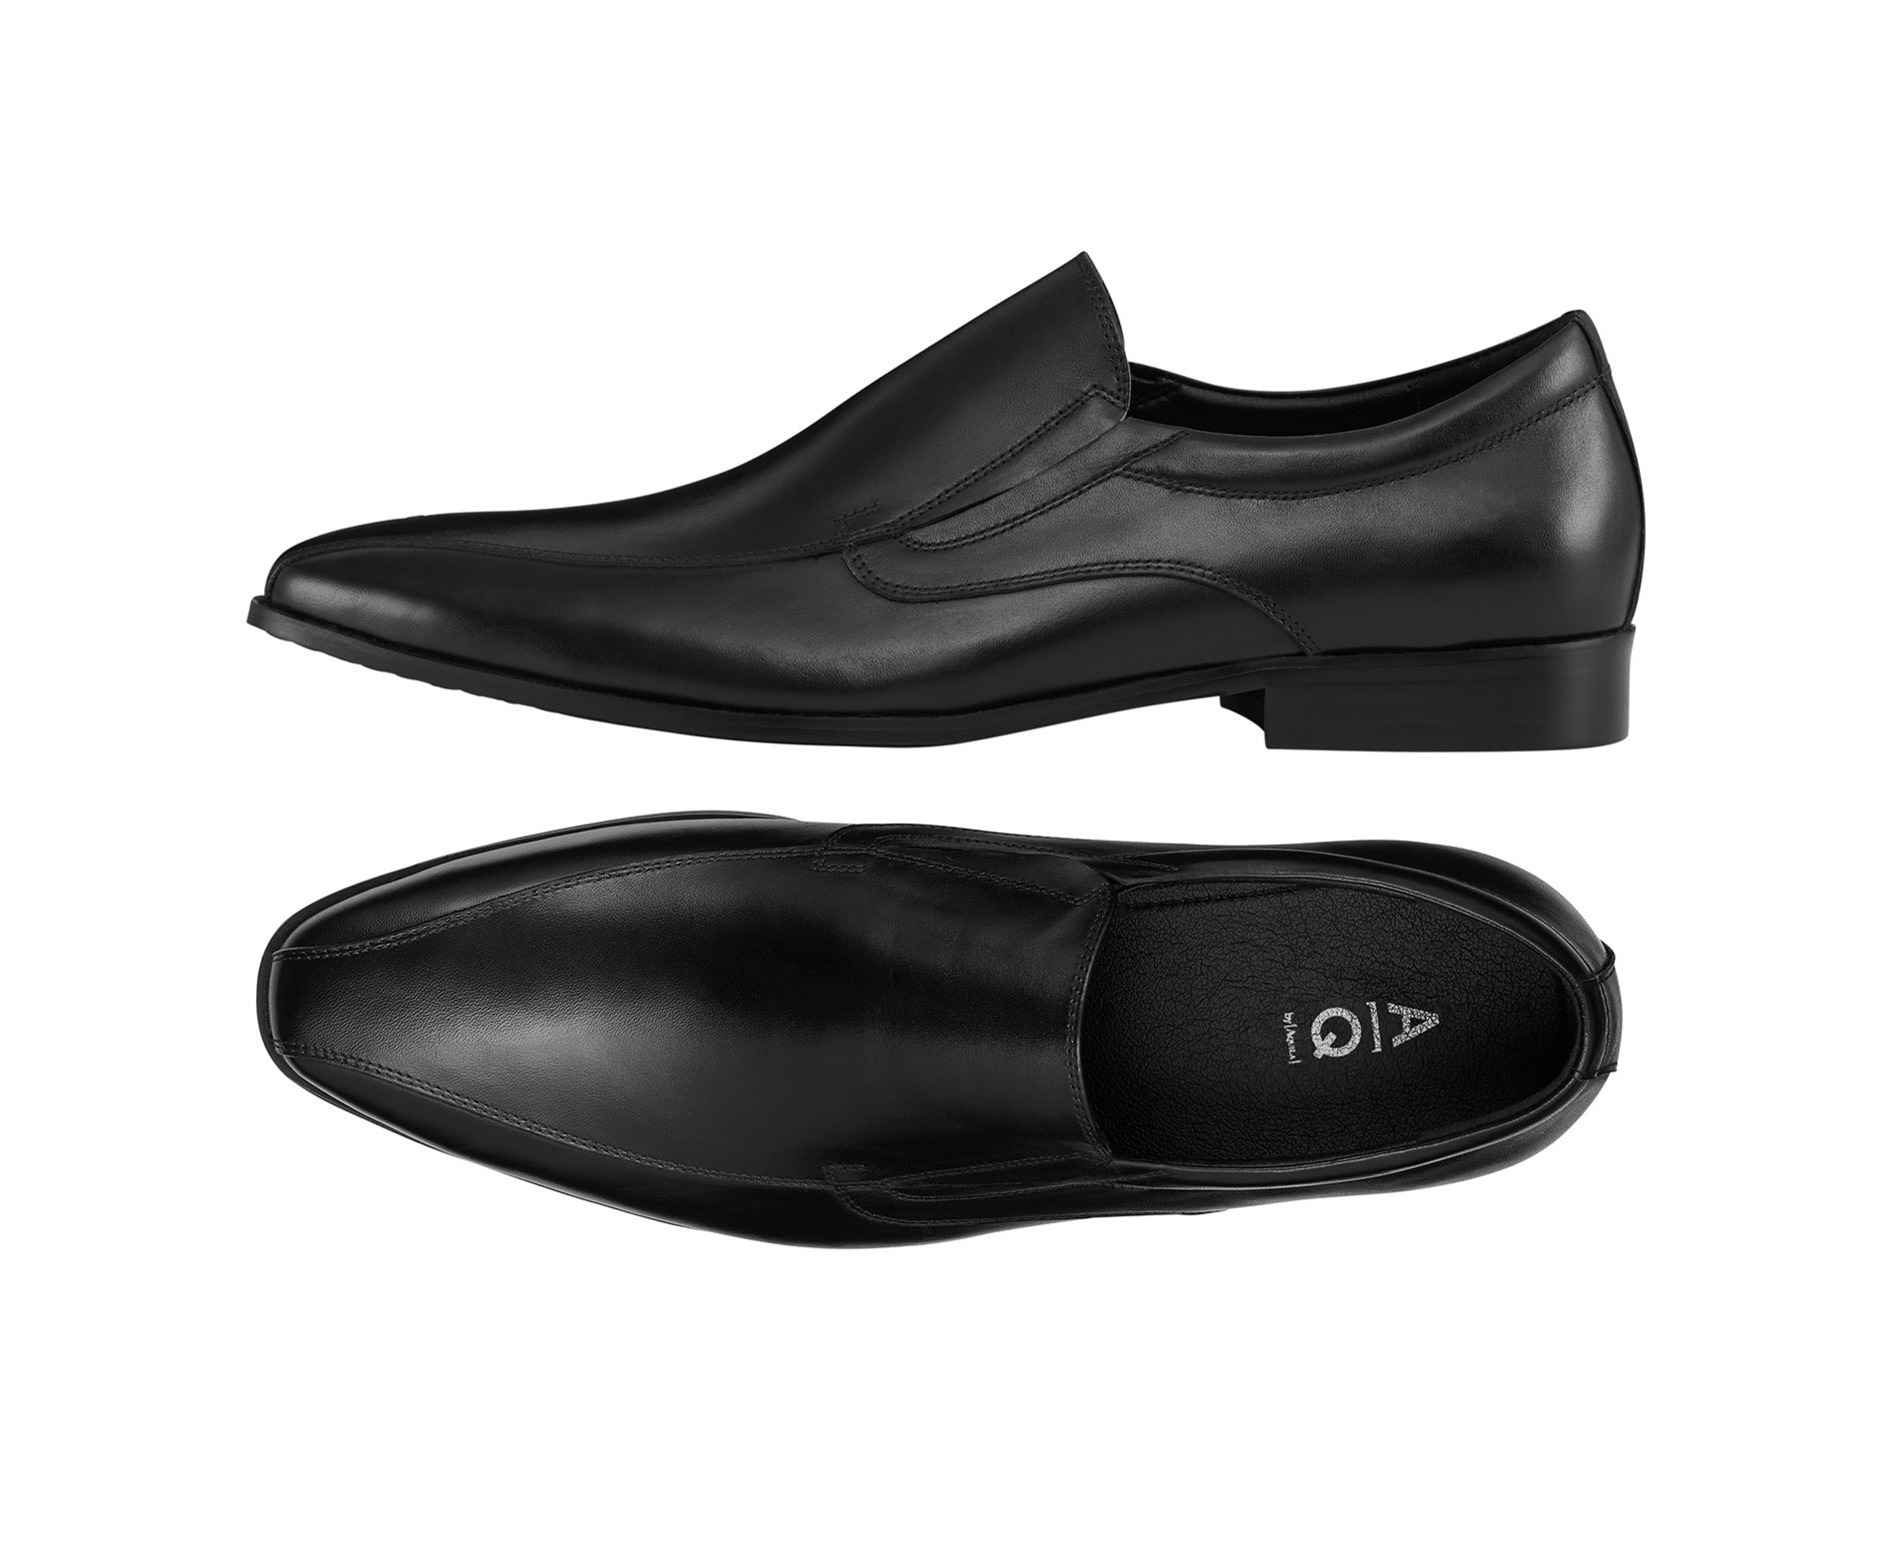 Aq by Aquila Mens Houlahan Slip On Shoes - Black | Catch.com.au